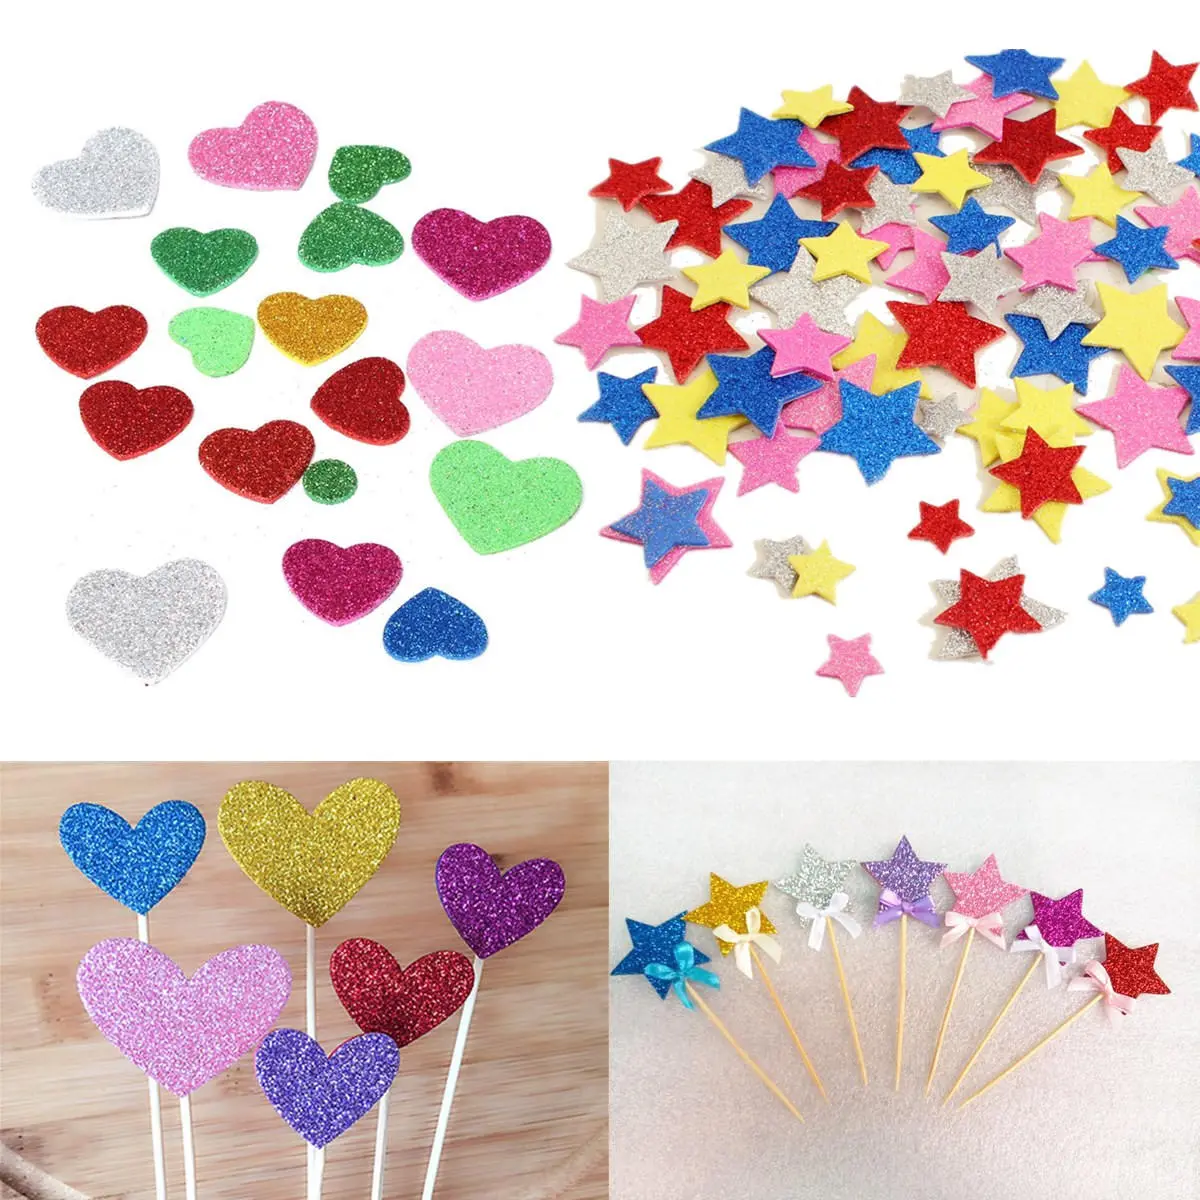 30pcs assorted glitter shapes hearts stars round flowers foam stickers diy craft